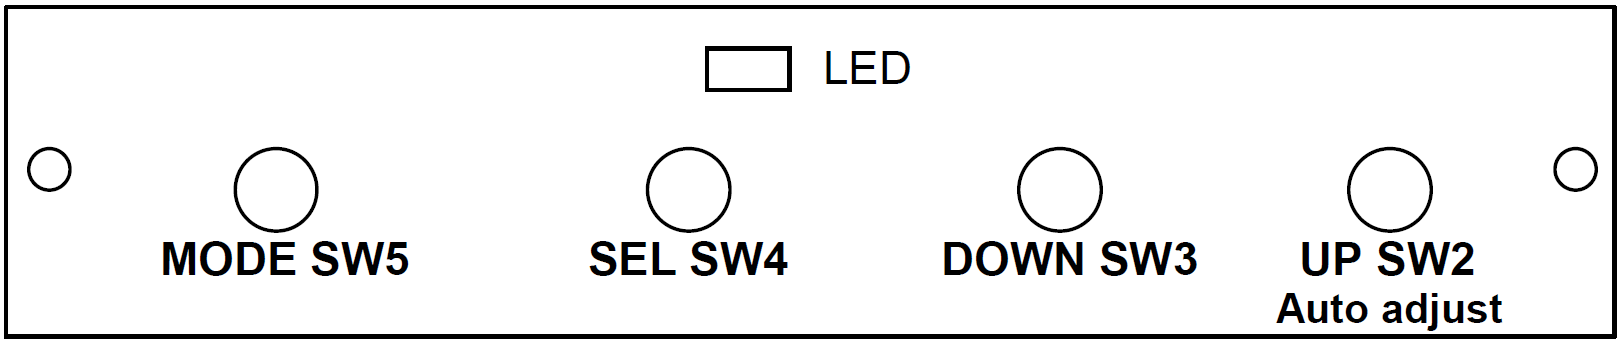 CGA LCD Auto - Manual Adjust